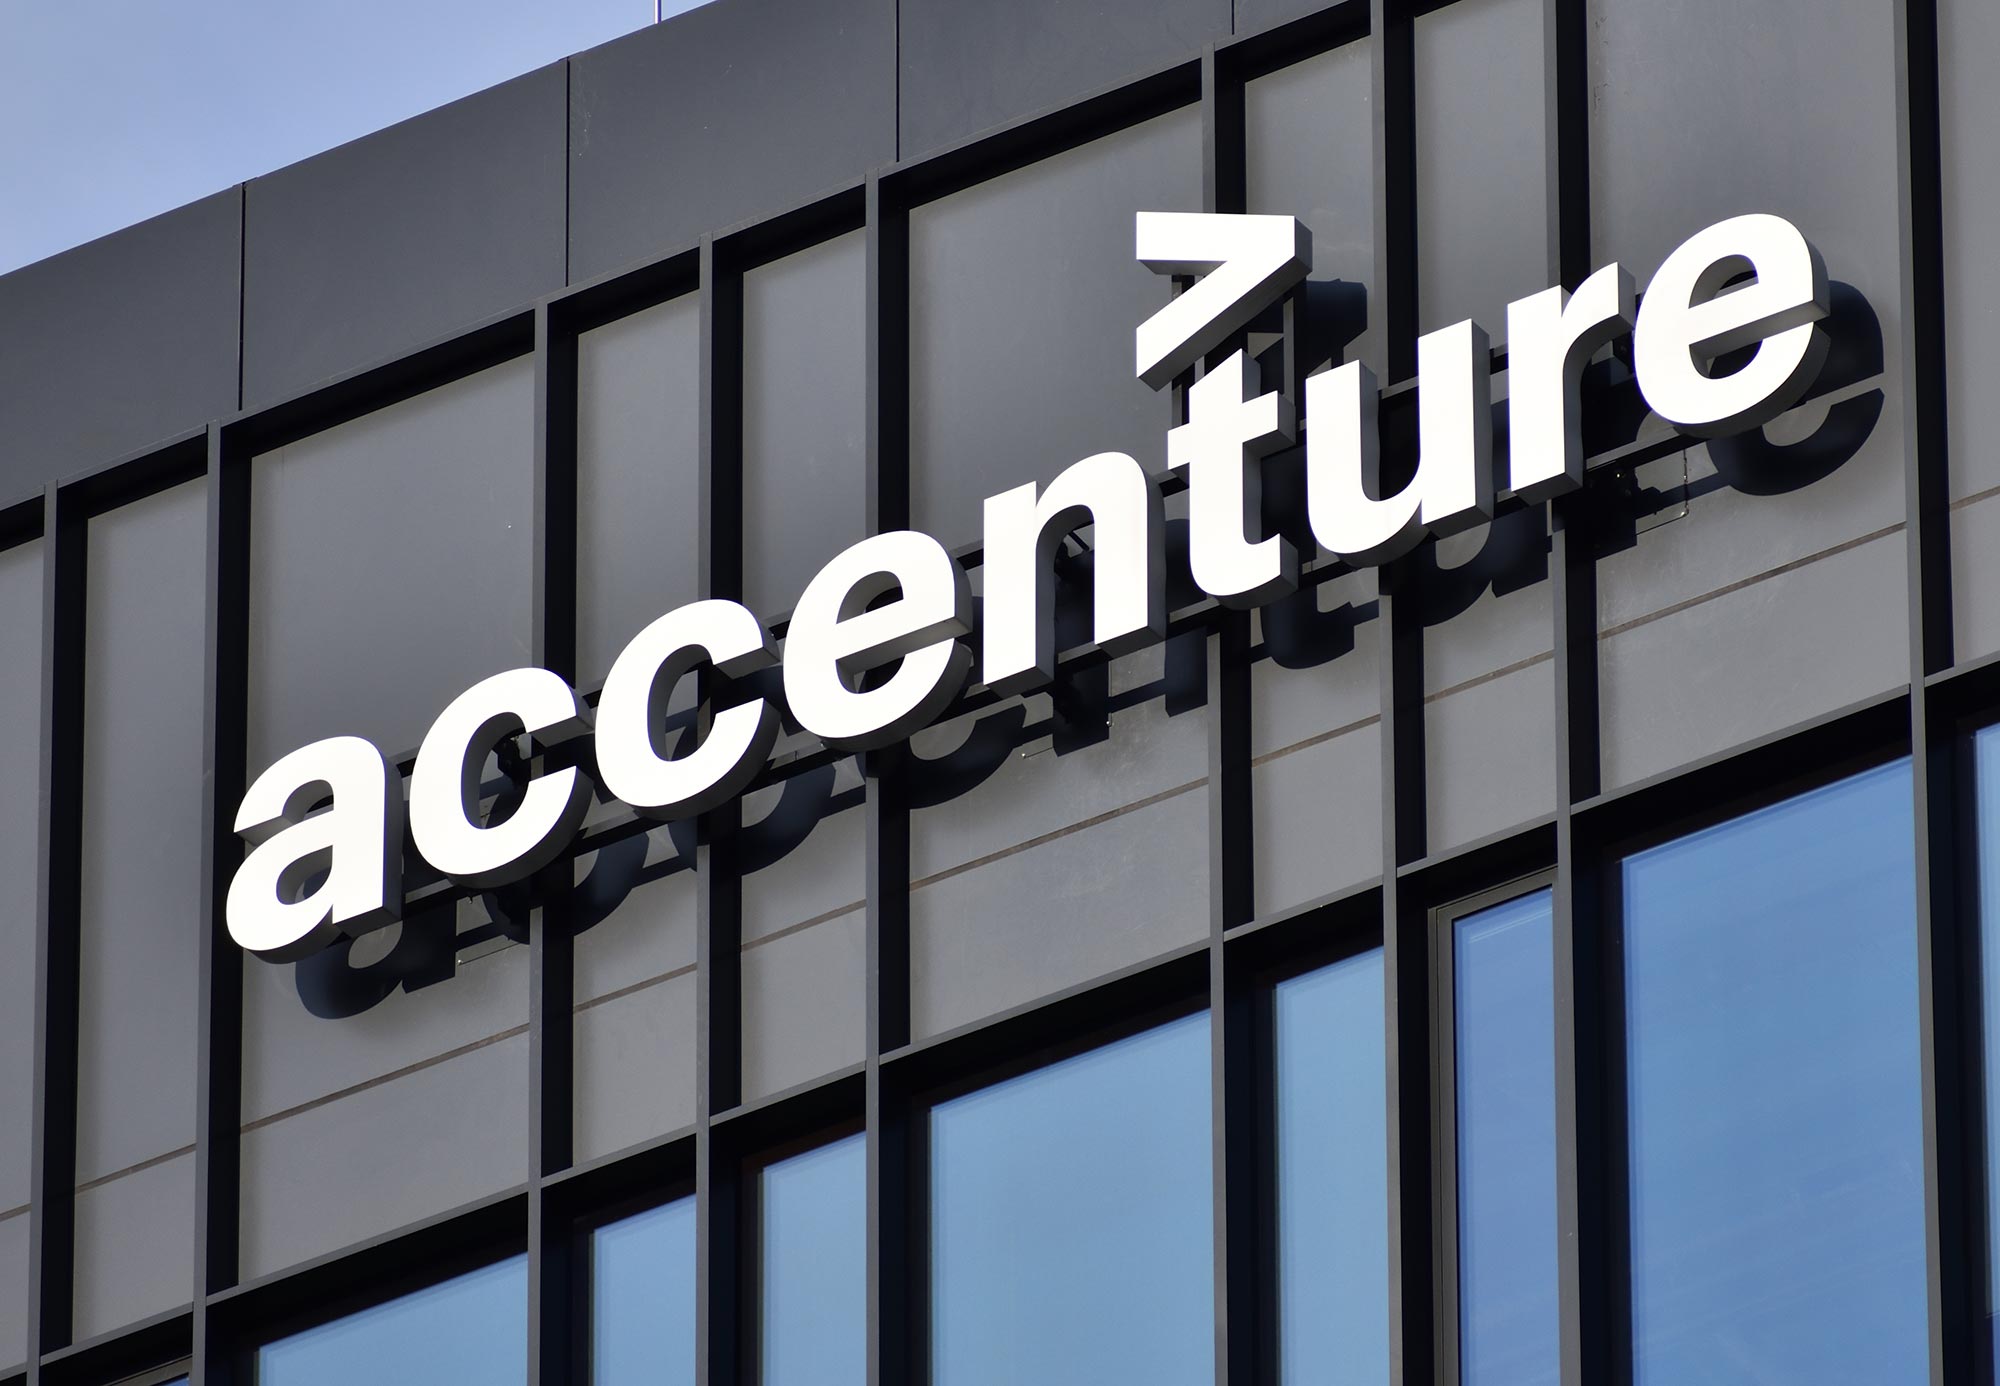 Accenture is hiring| web developer associate | Apply here!